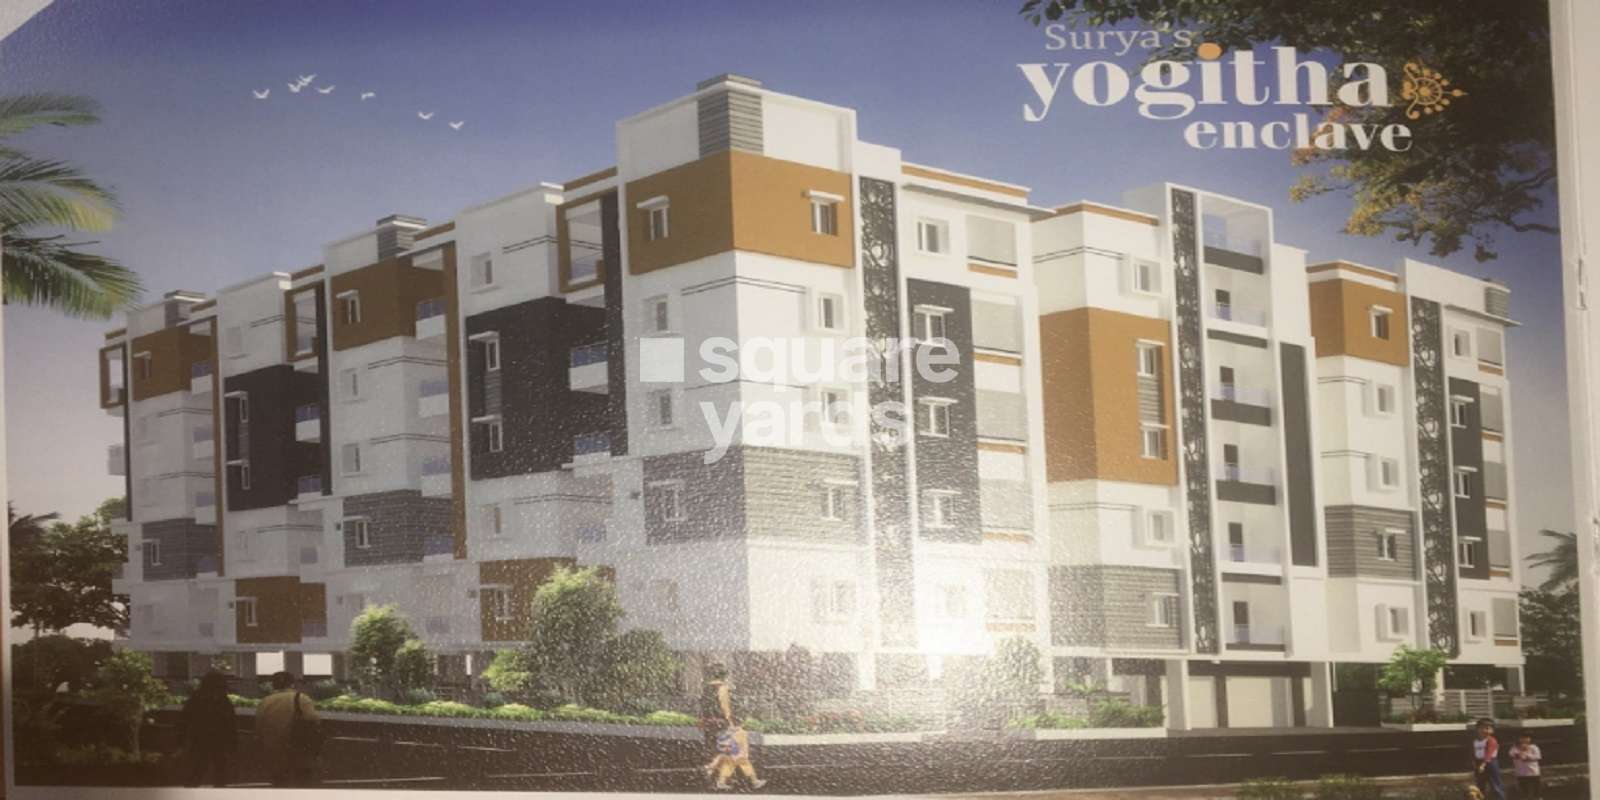 Surya Yogitha Enclave Cover Image